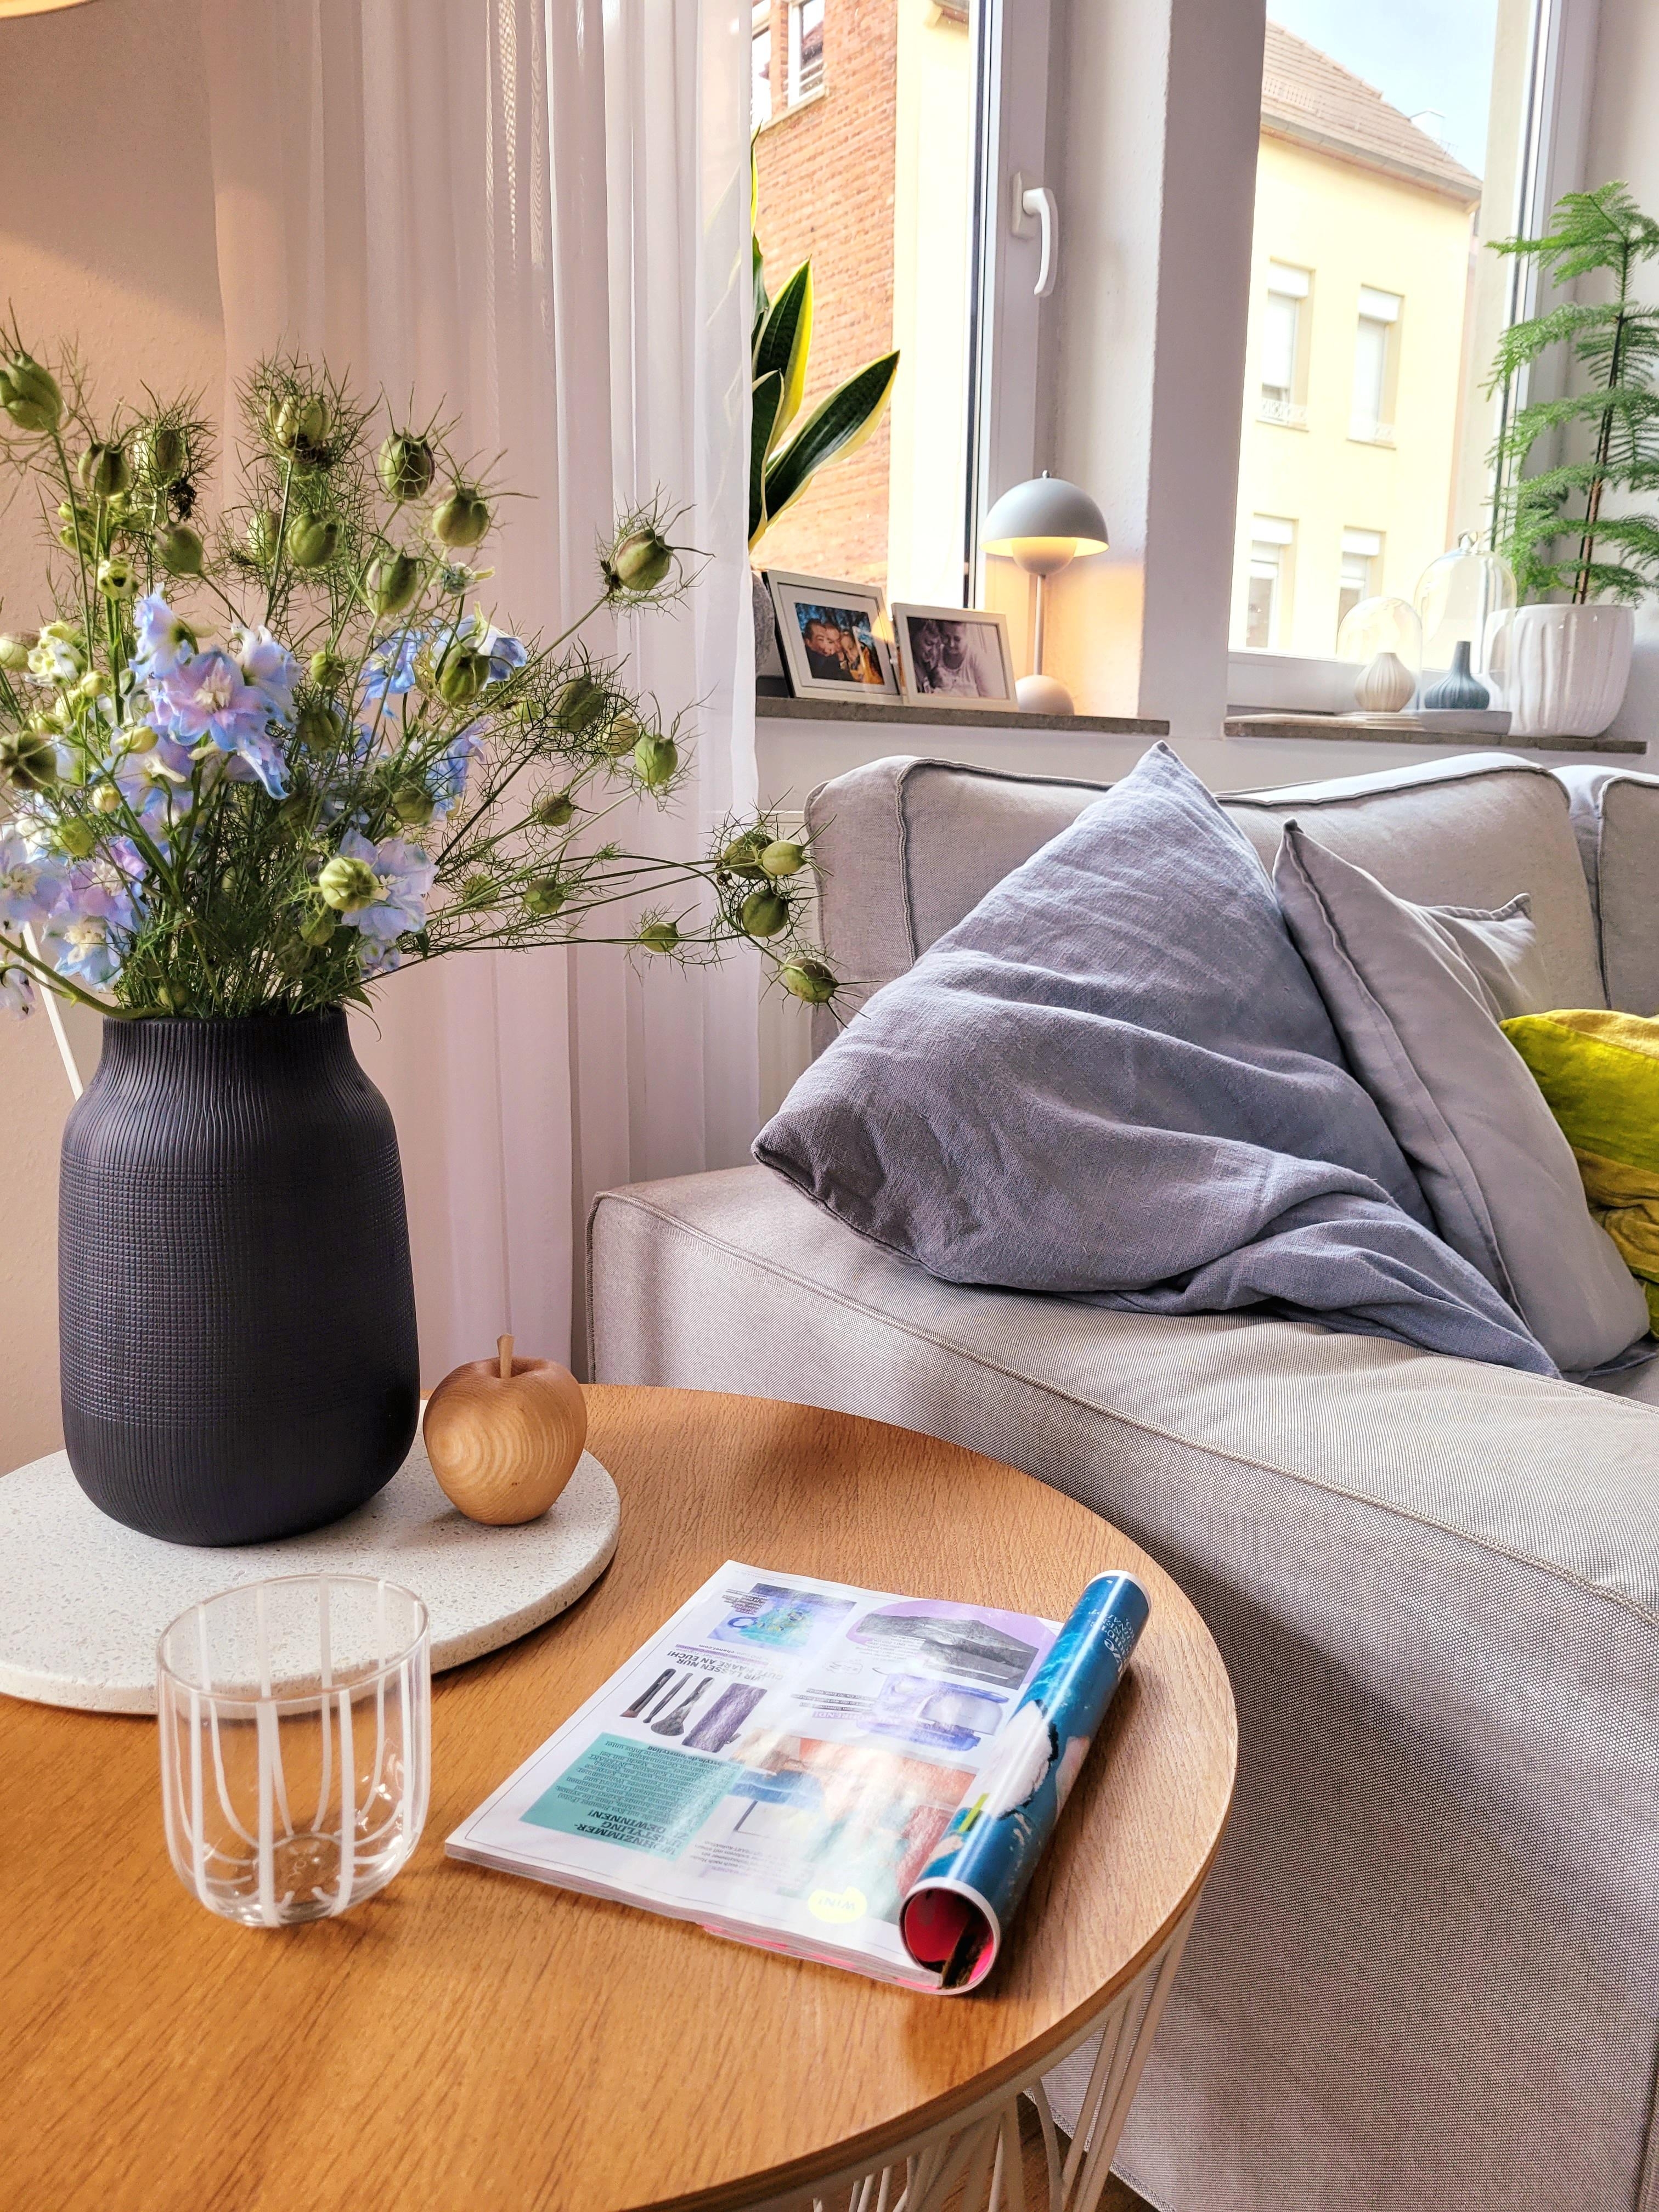 Lieblings Zeitung lesen!
#couchmagazin #altbau #Sofa #vase #blumenliebe #lampe 